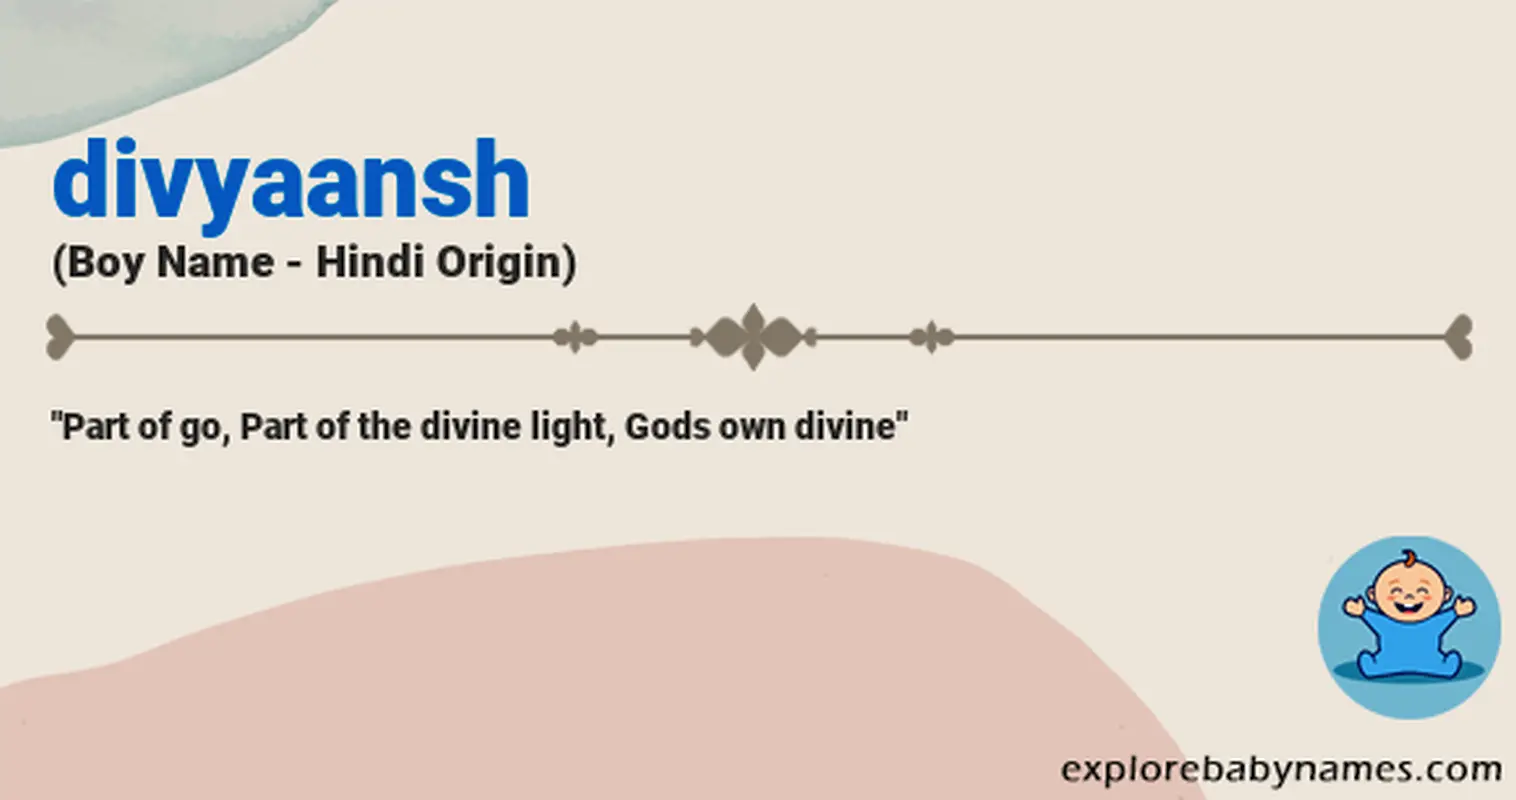 Meaning of Divyaansh